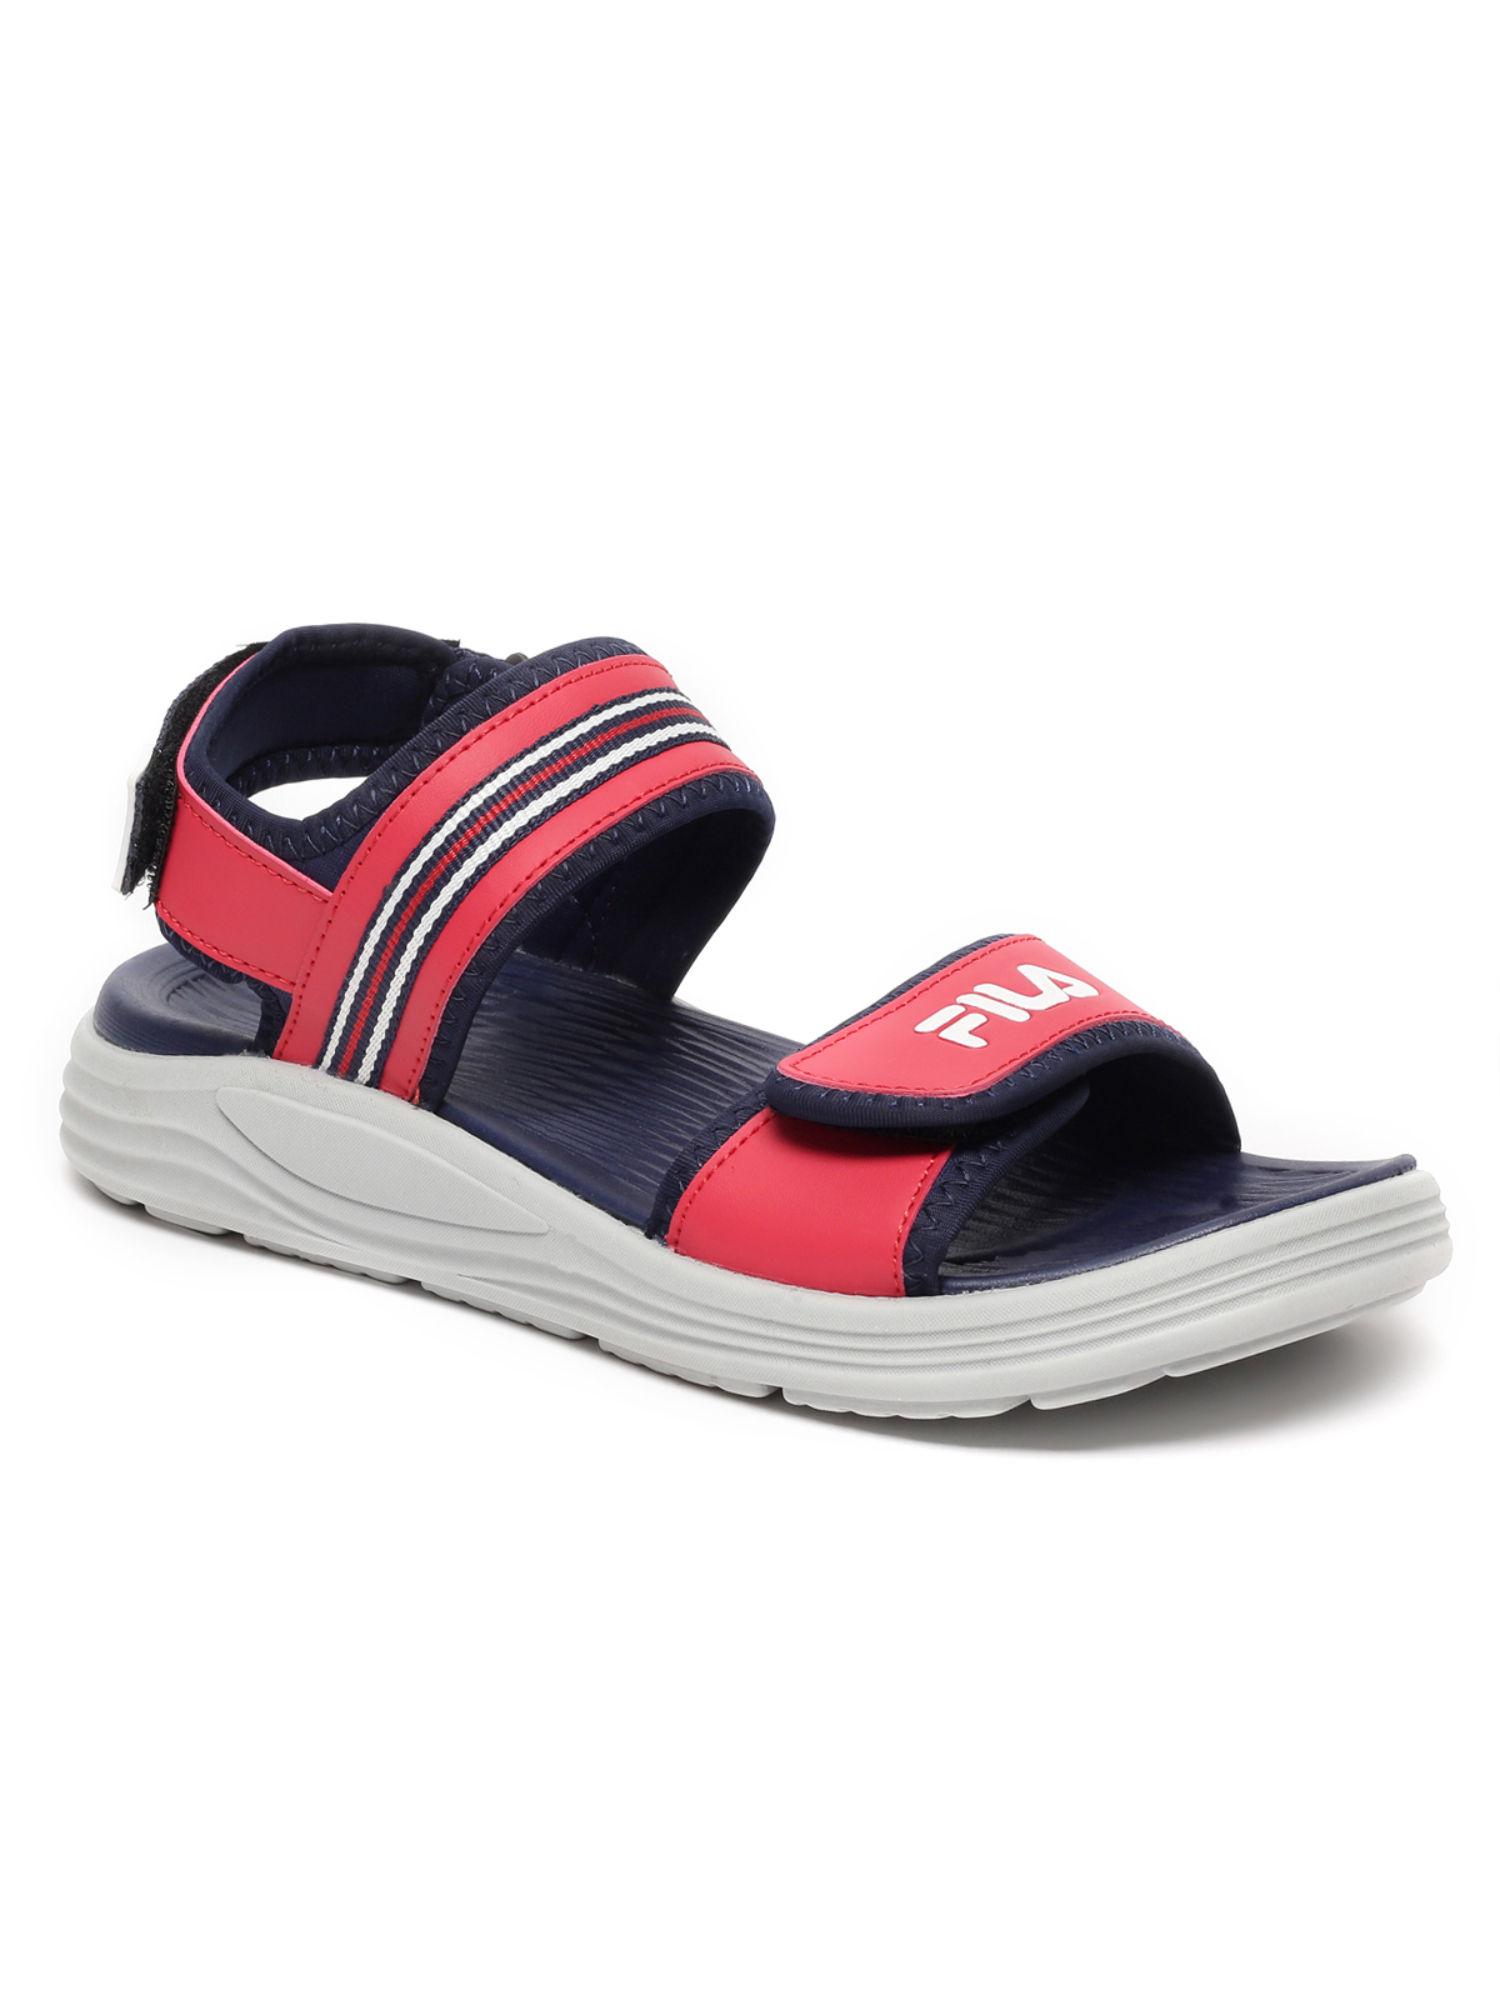 keystay-comfort-footwear-red-sandals